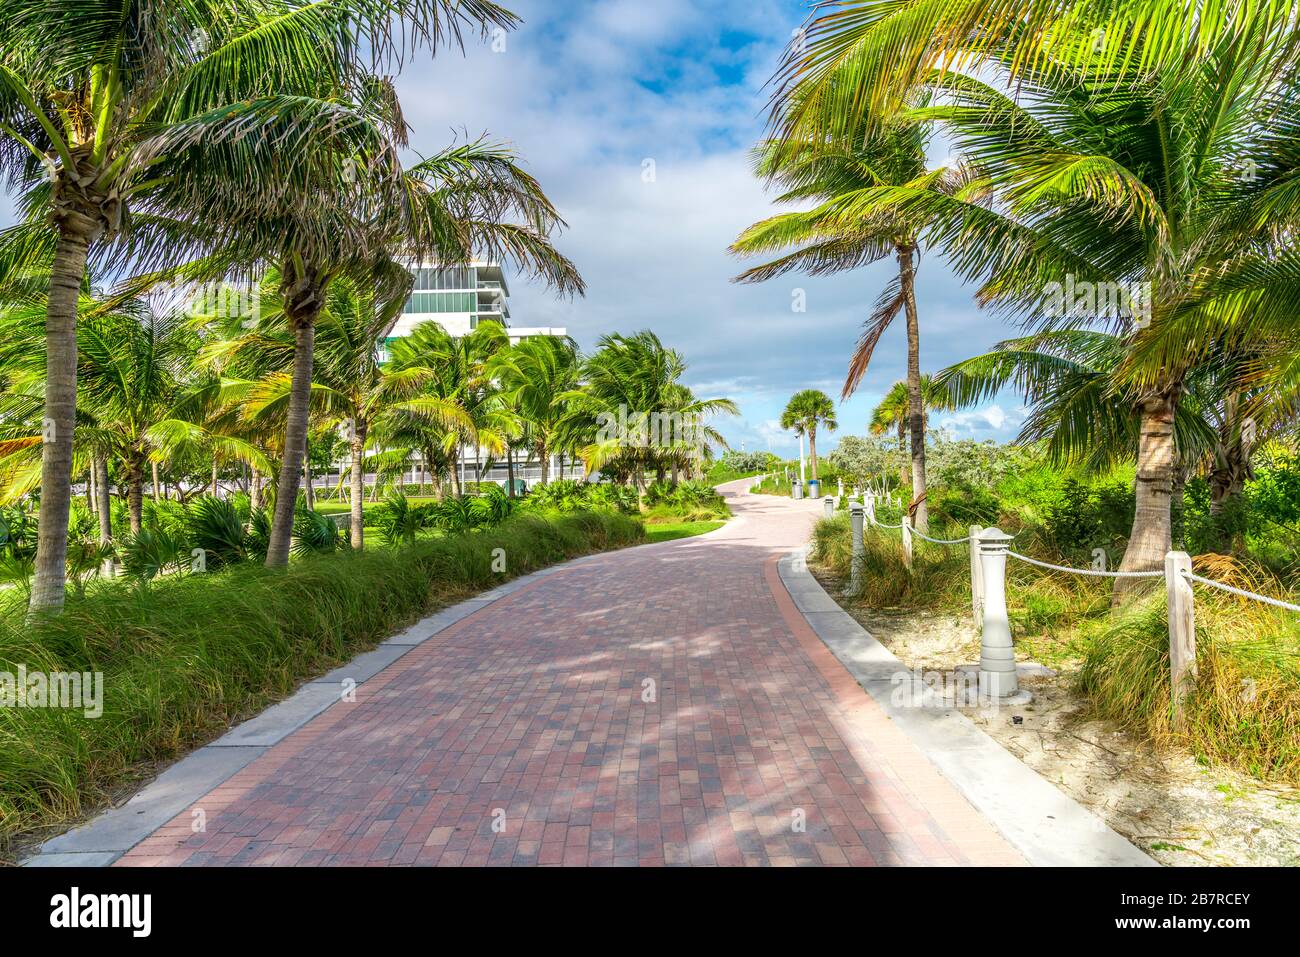 Walkway with palm trees in Miami beach, Florida Stock Photo